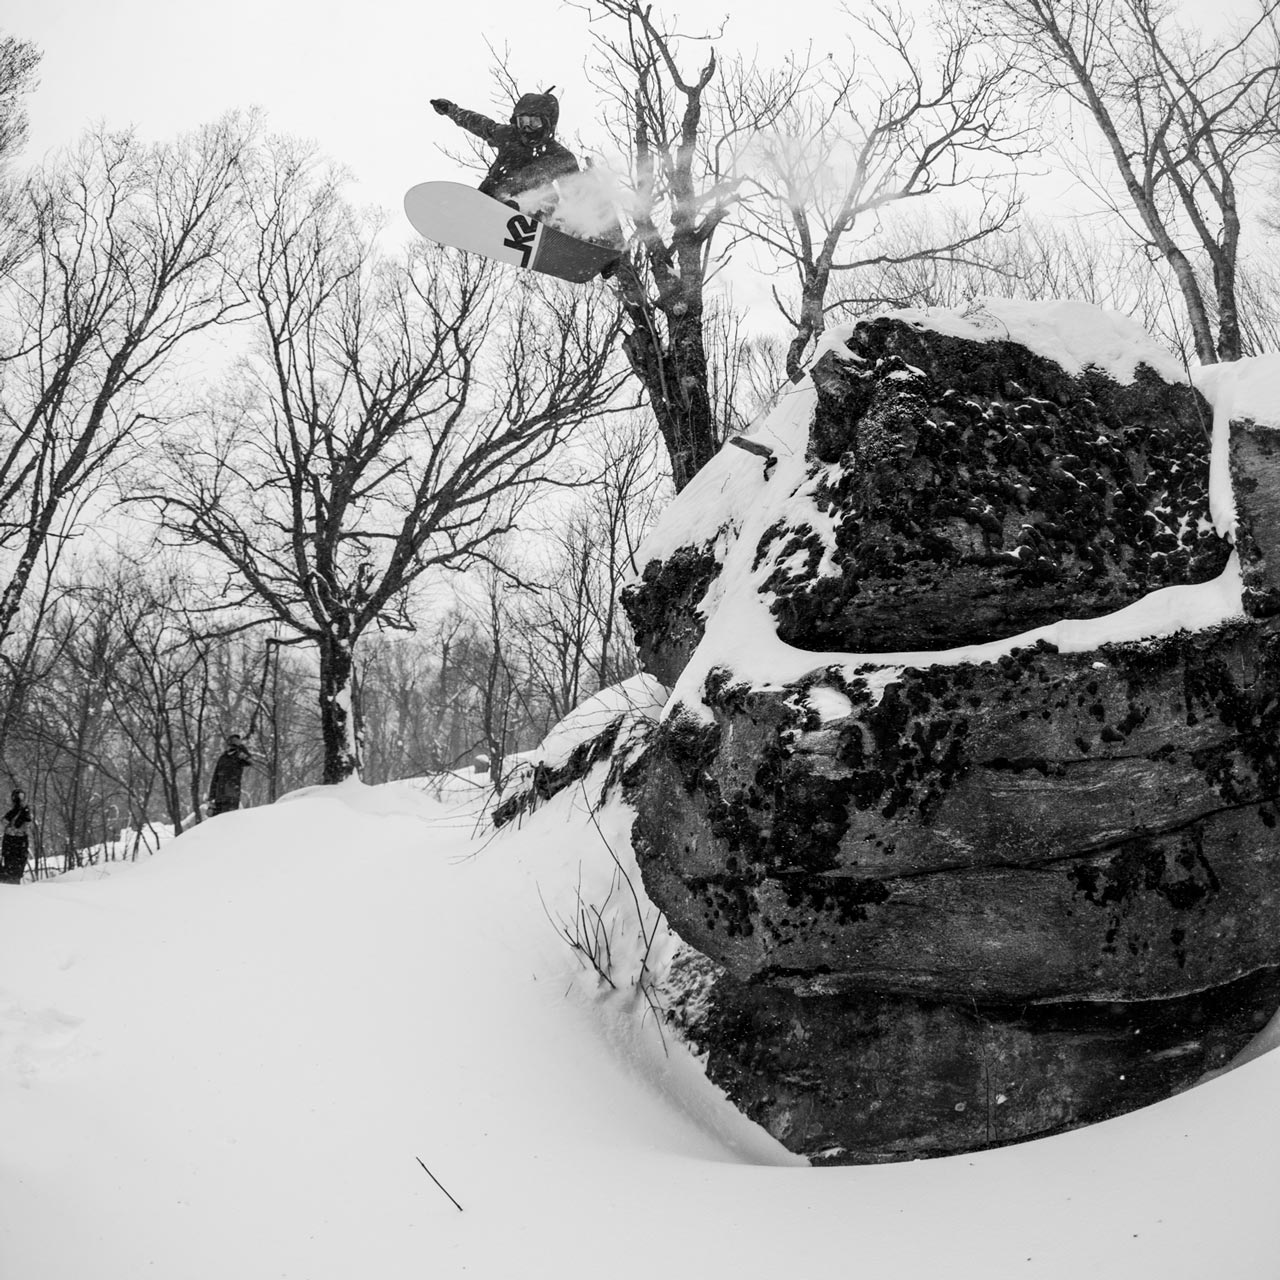 Parker Szumowski | © K2 Snowboarding